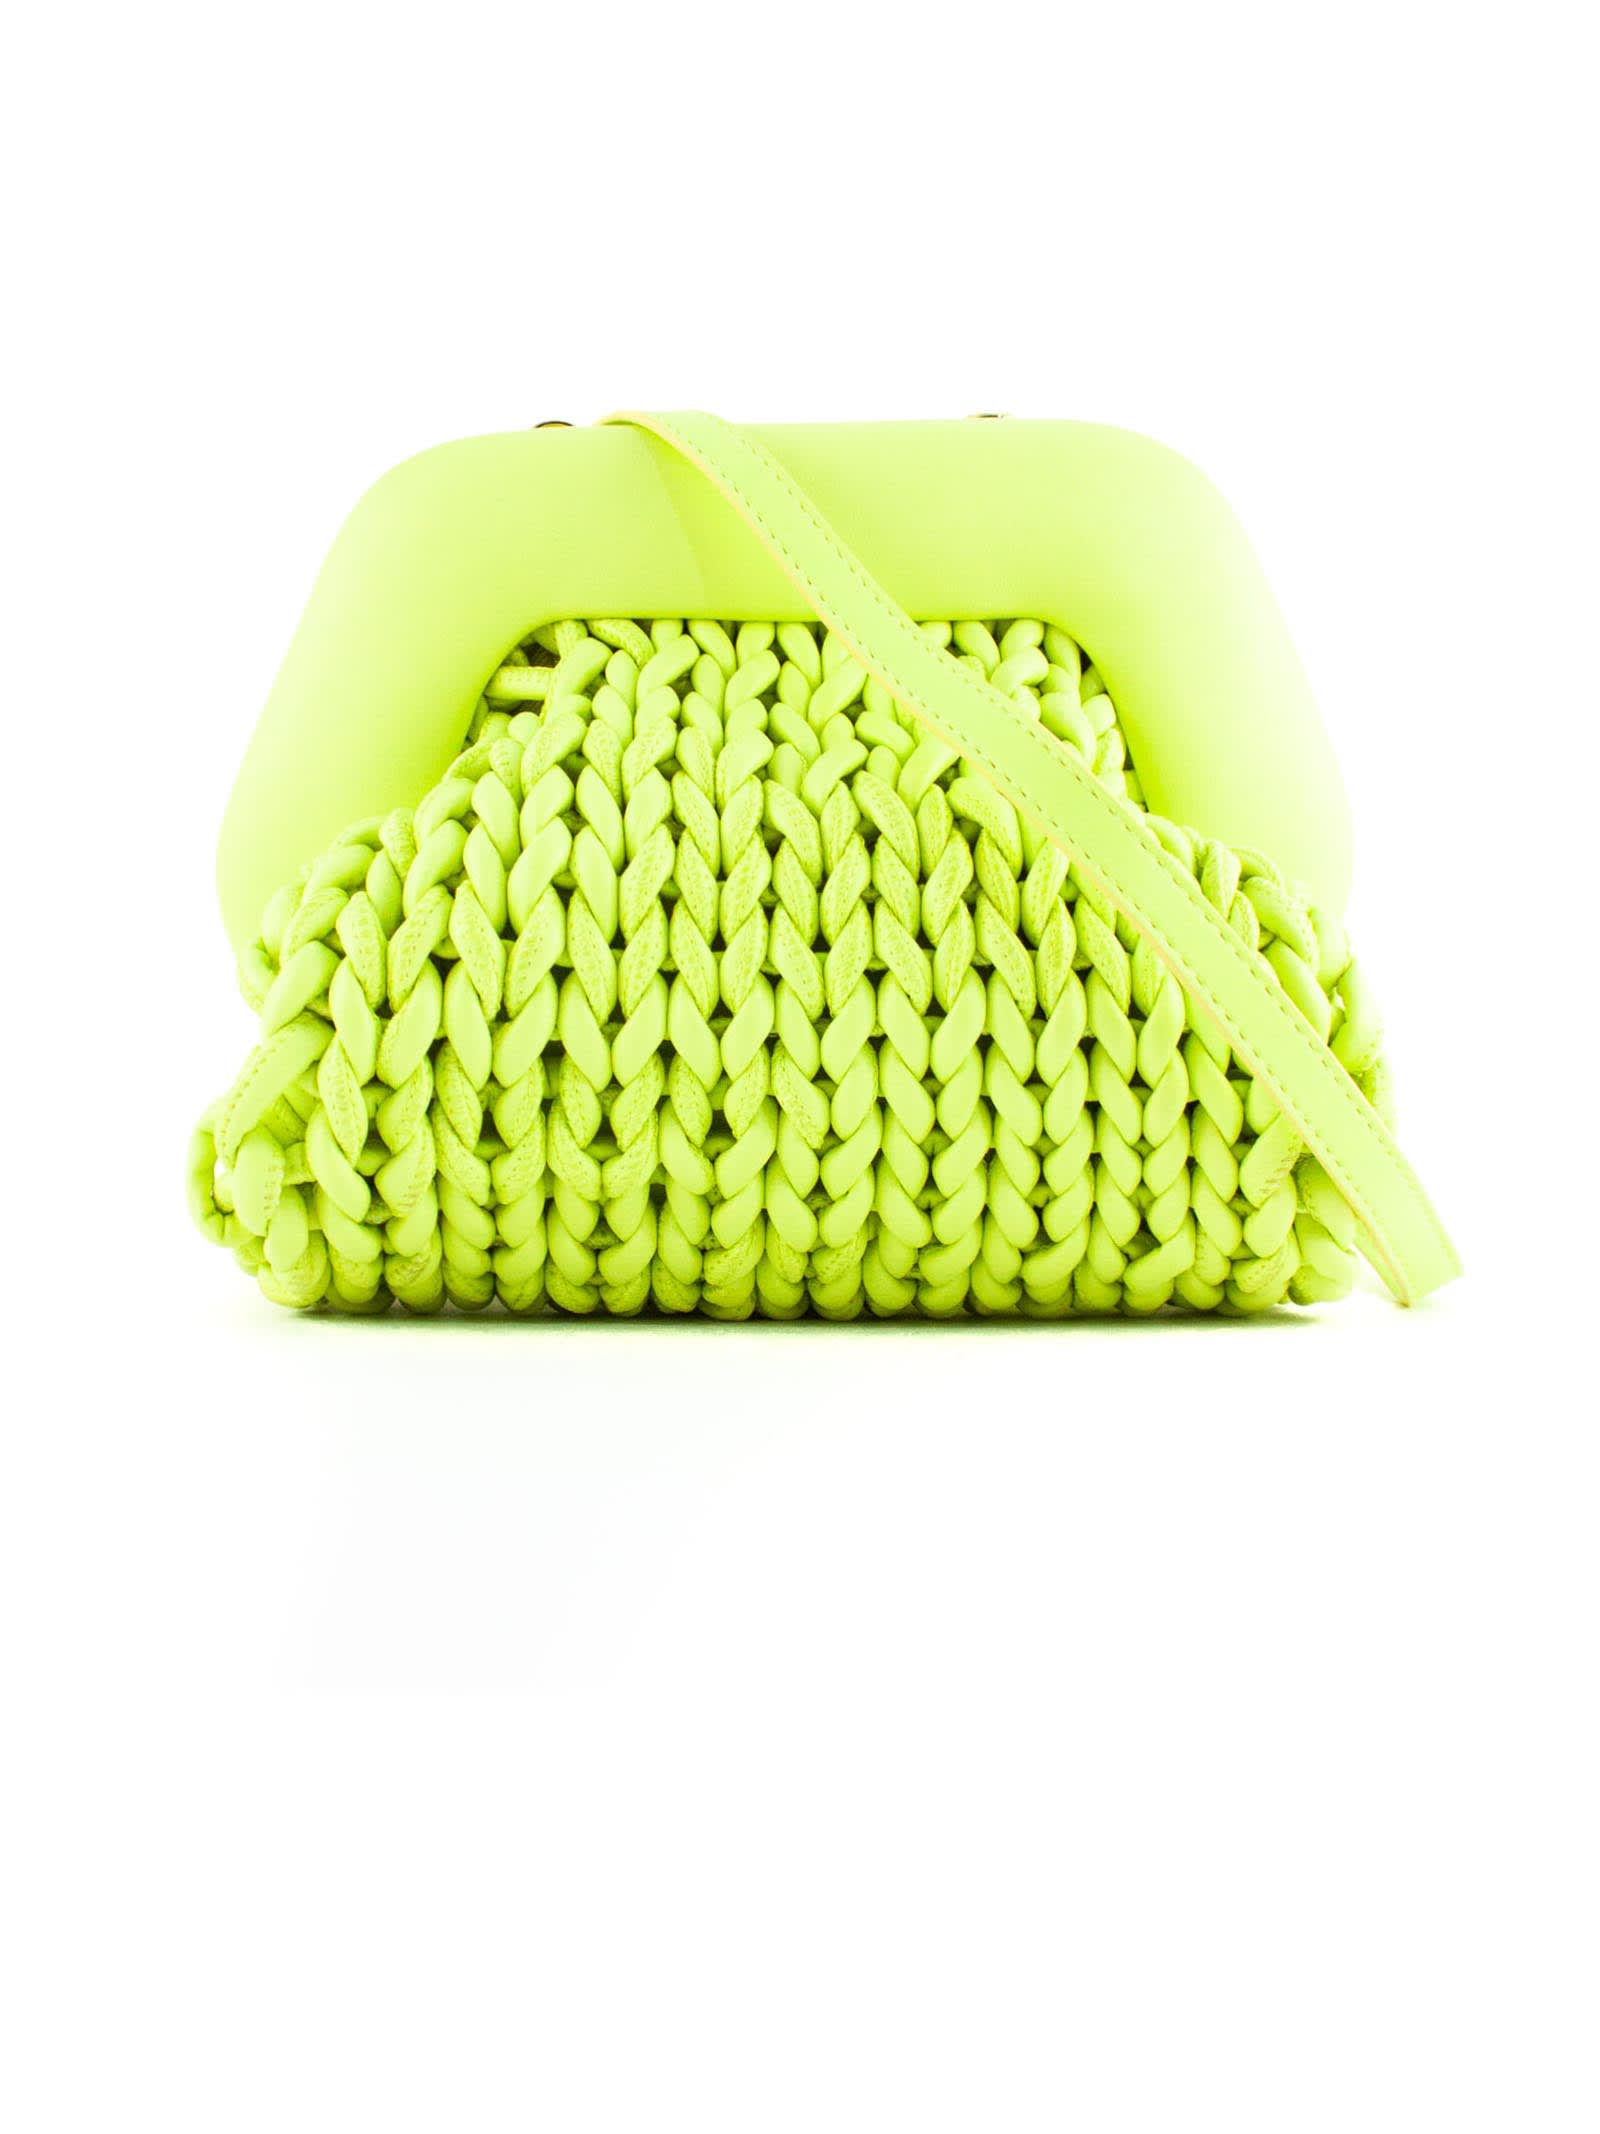 THEMOIRè Bios Knitted Yellow Clutch Bag